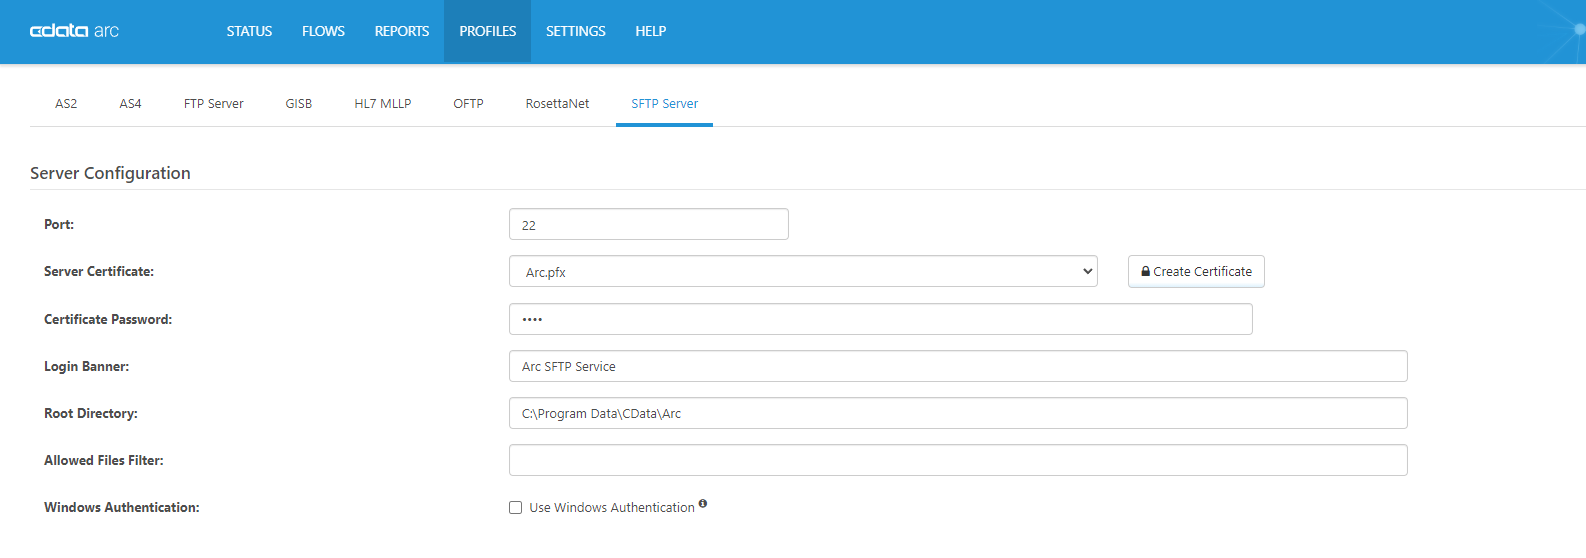 Sample SFTP Server Profile configuration